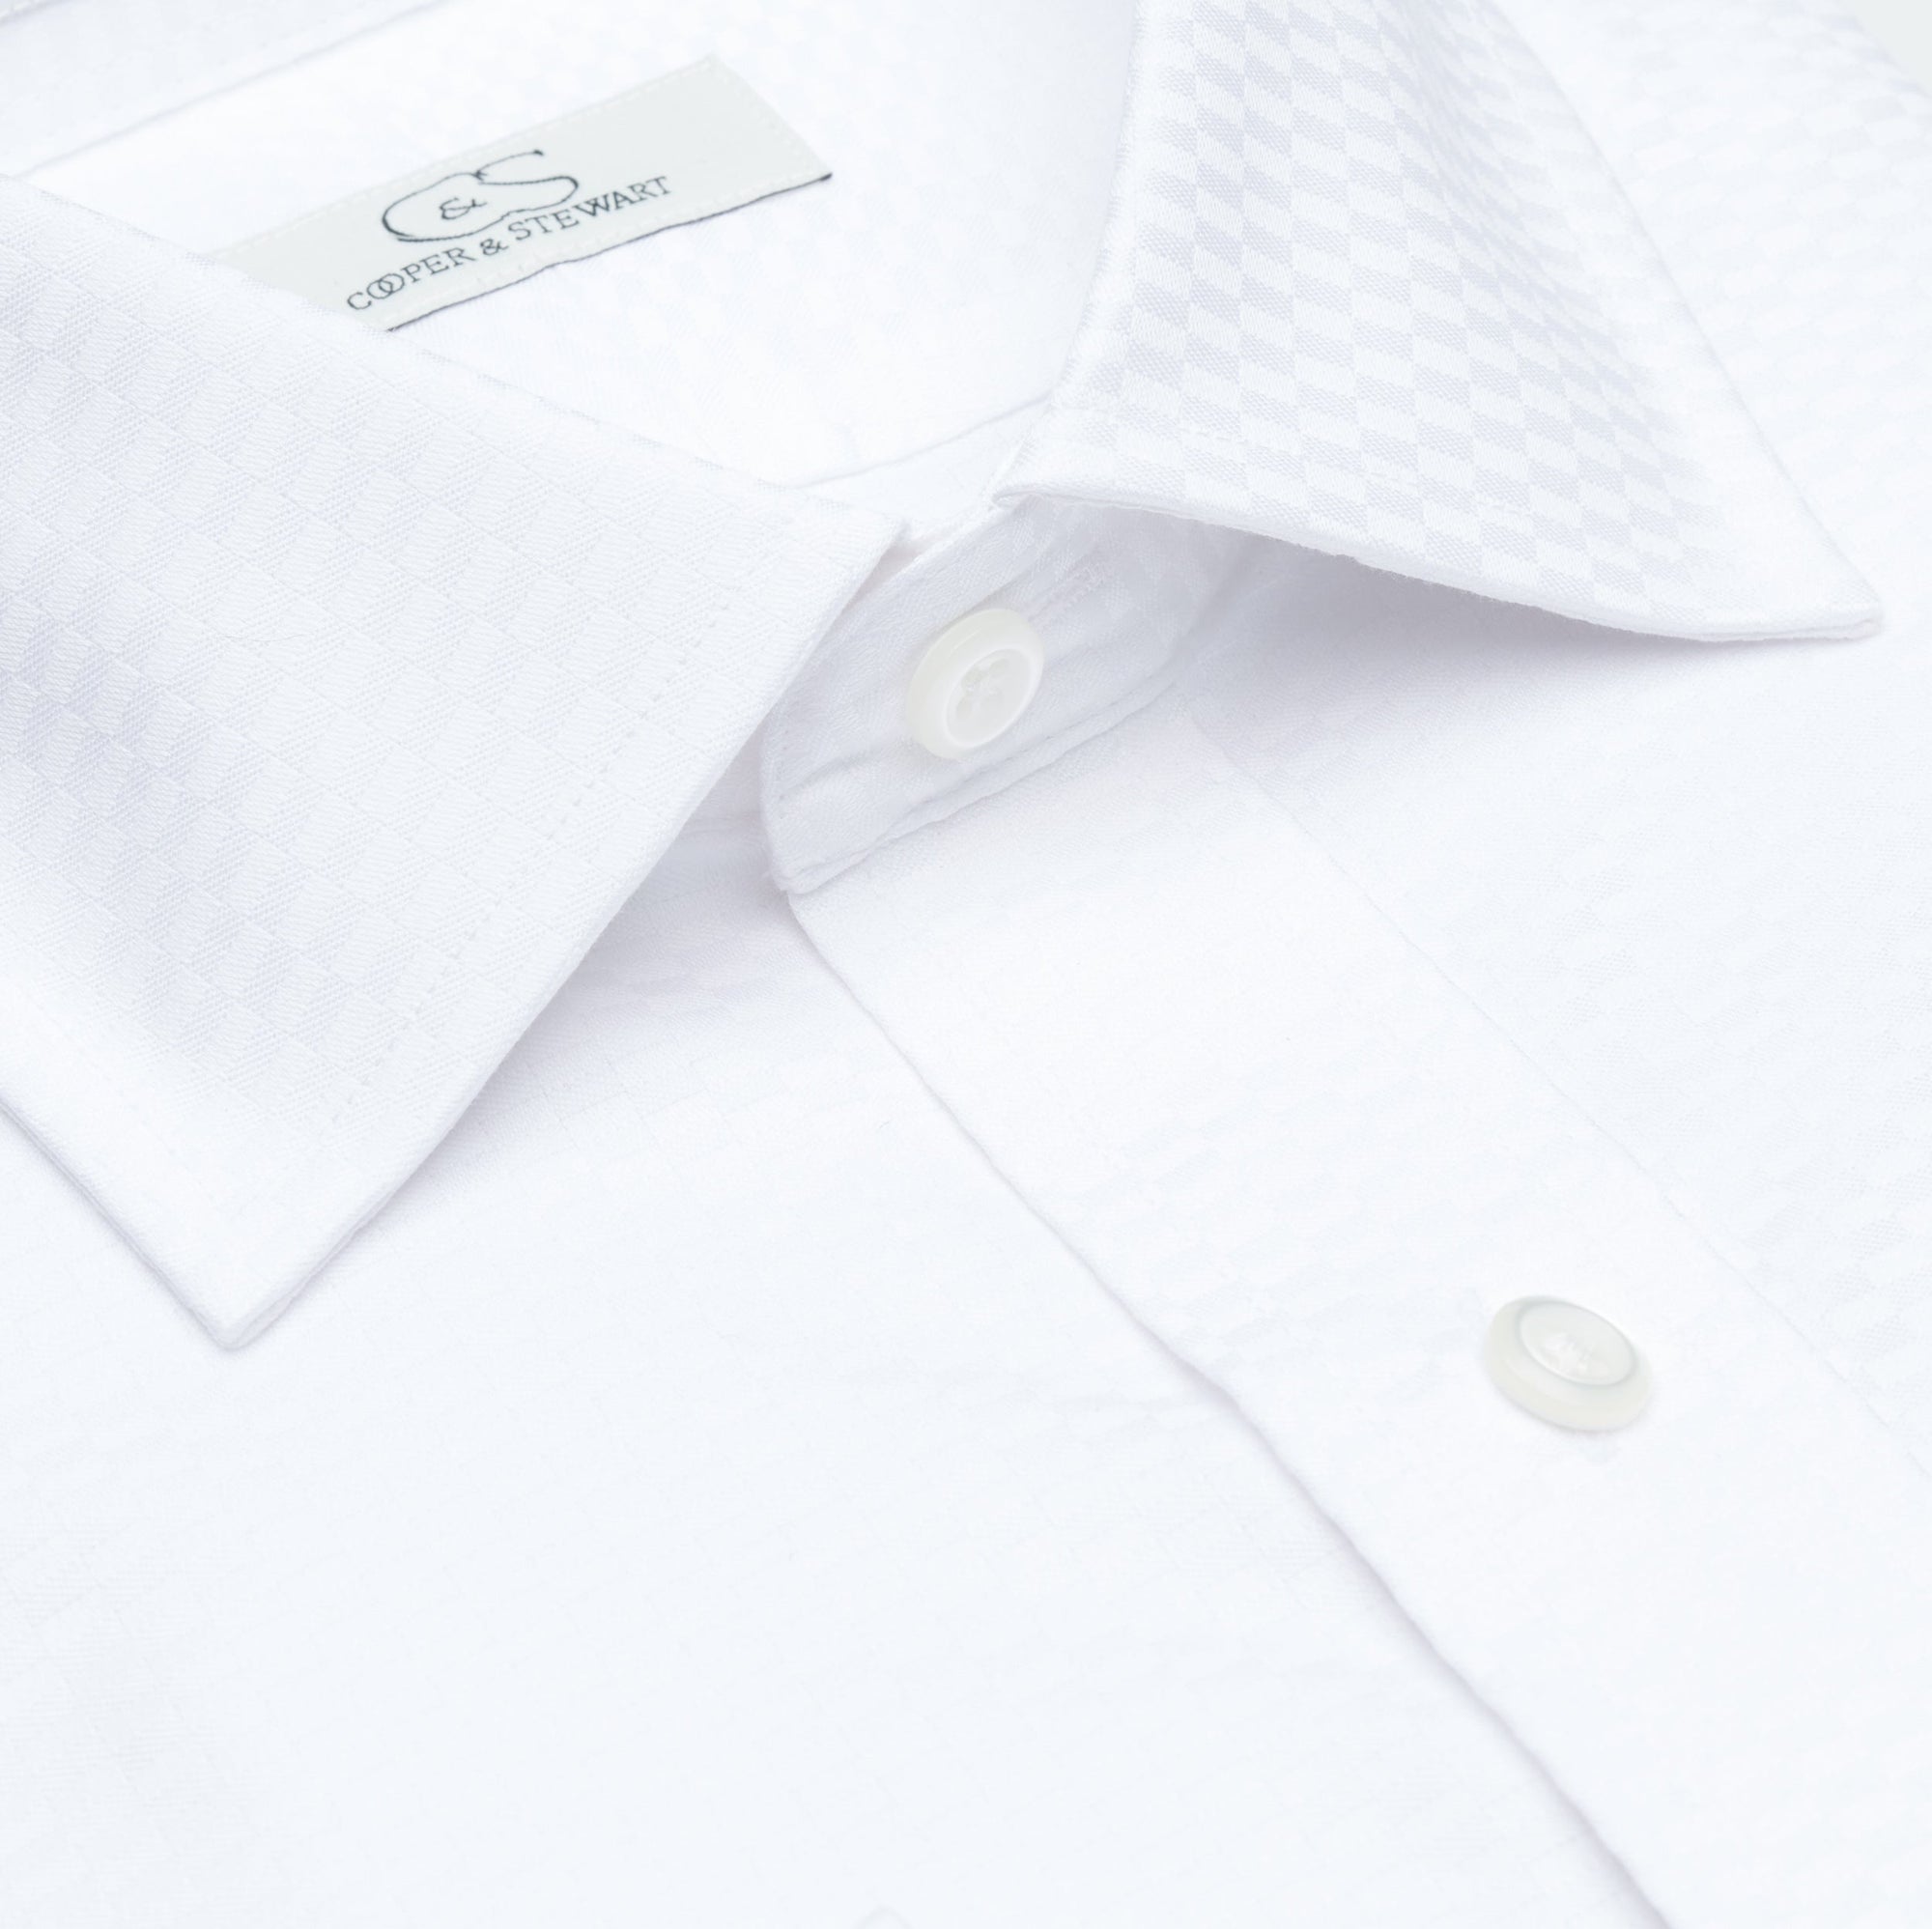 The Tuxedo Shirt - Wrinkle-Free Tonal Check Cotton Dress Shirt in White by Cooper & Stewart